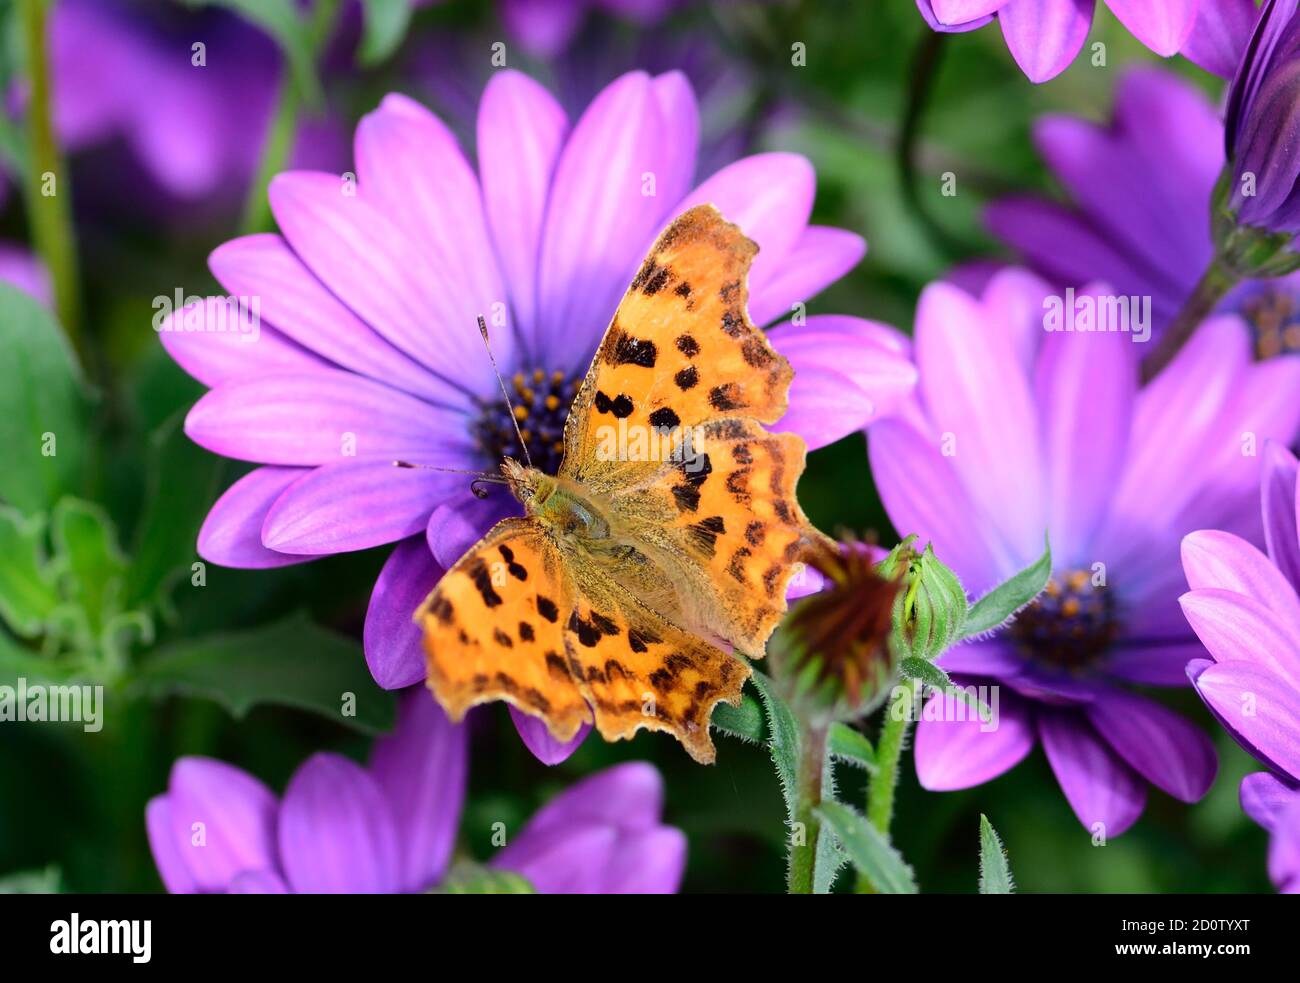 A Comma butterfly on an Osteospermum flower. Stock Photo